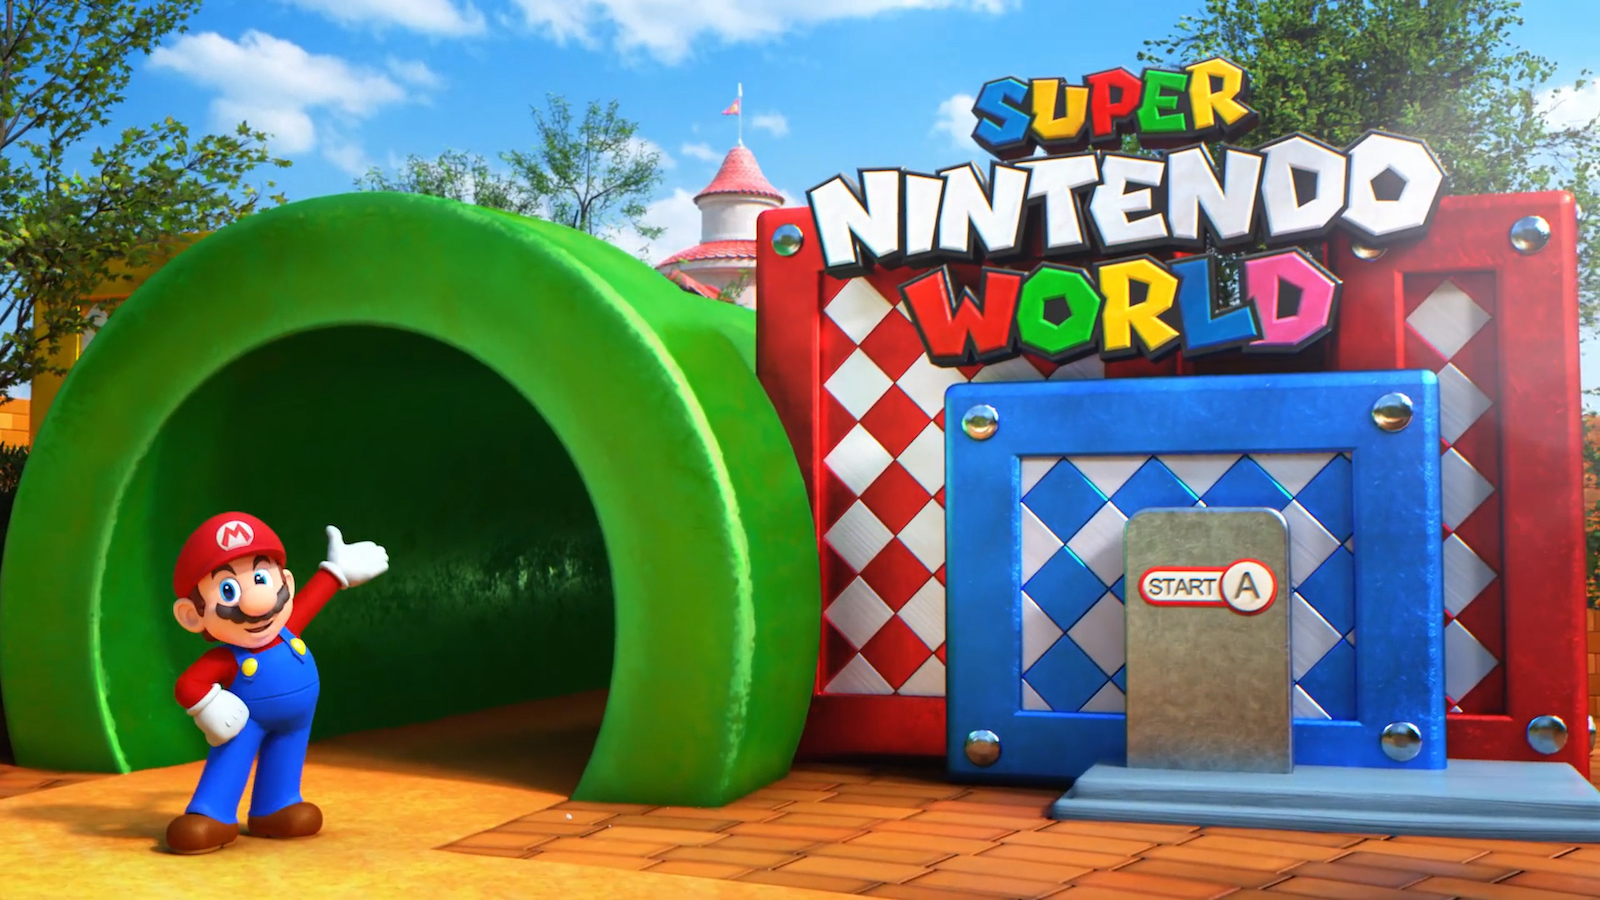 Construction has begun on Super Nintendo World at Universal Studios Hollywood